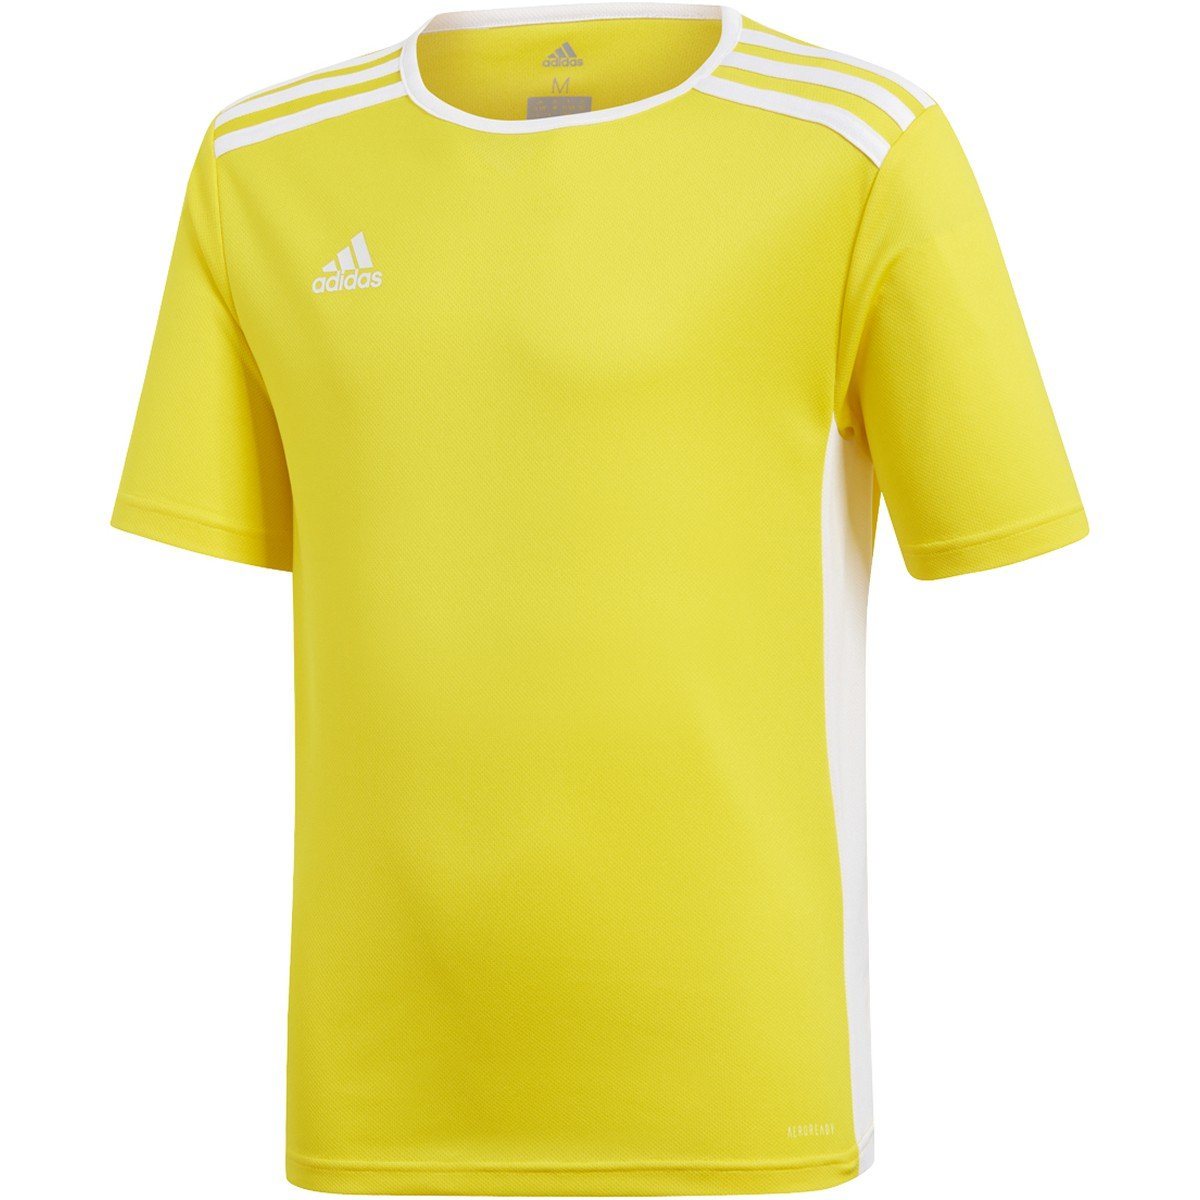 adidas Youth Entrada 18 Jersey | CF1039 Soccer Apparel adidas Youth XXS yellow/white 